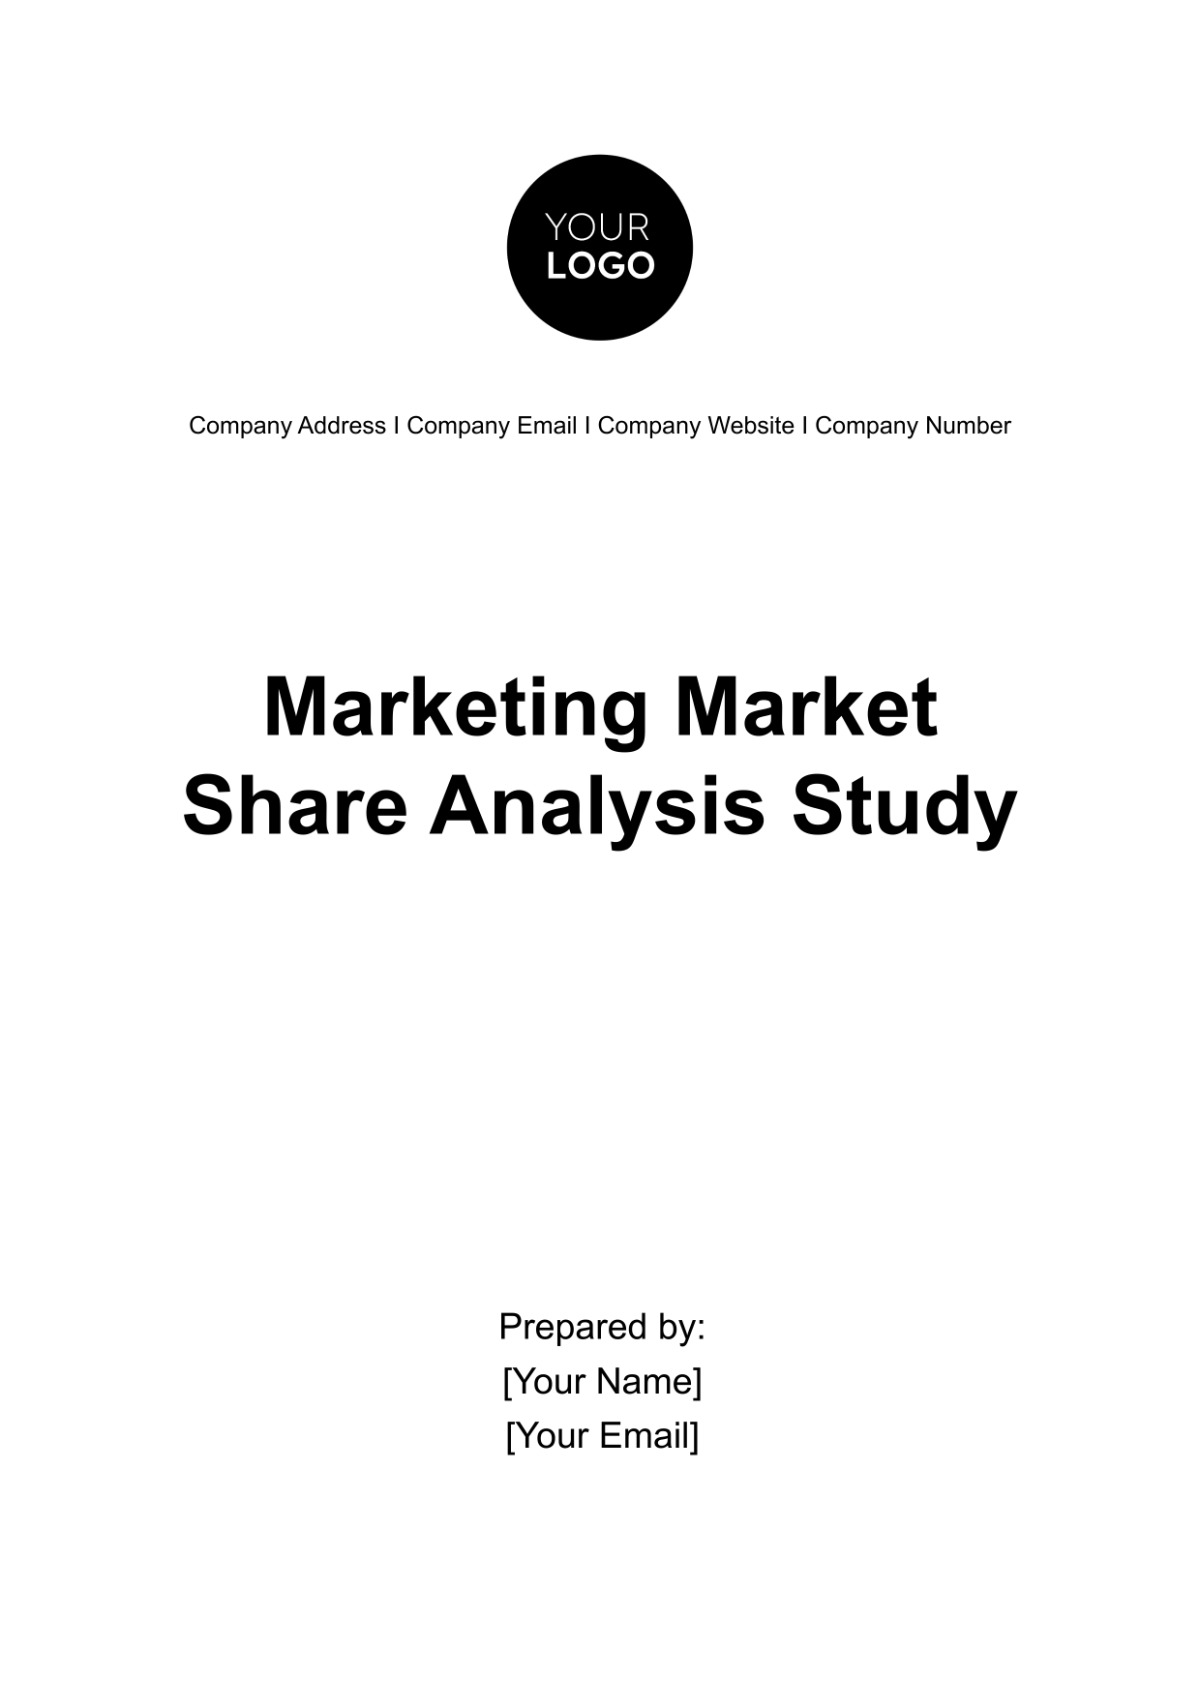 Marketing Market Share Analysis Study Template